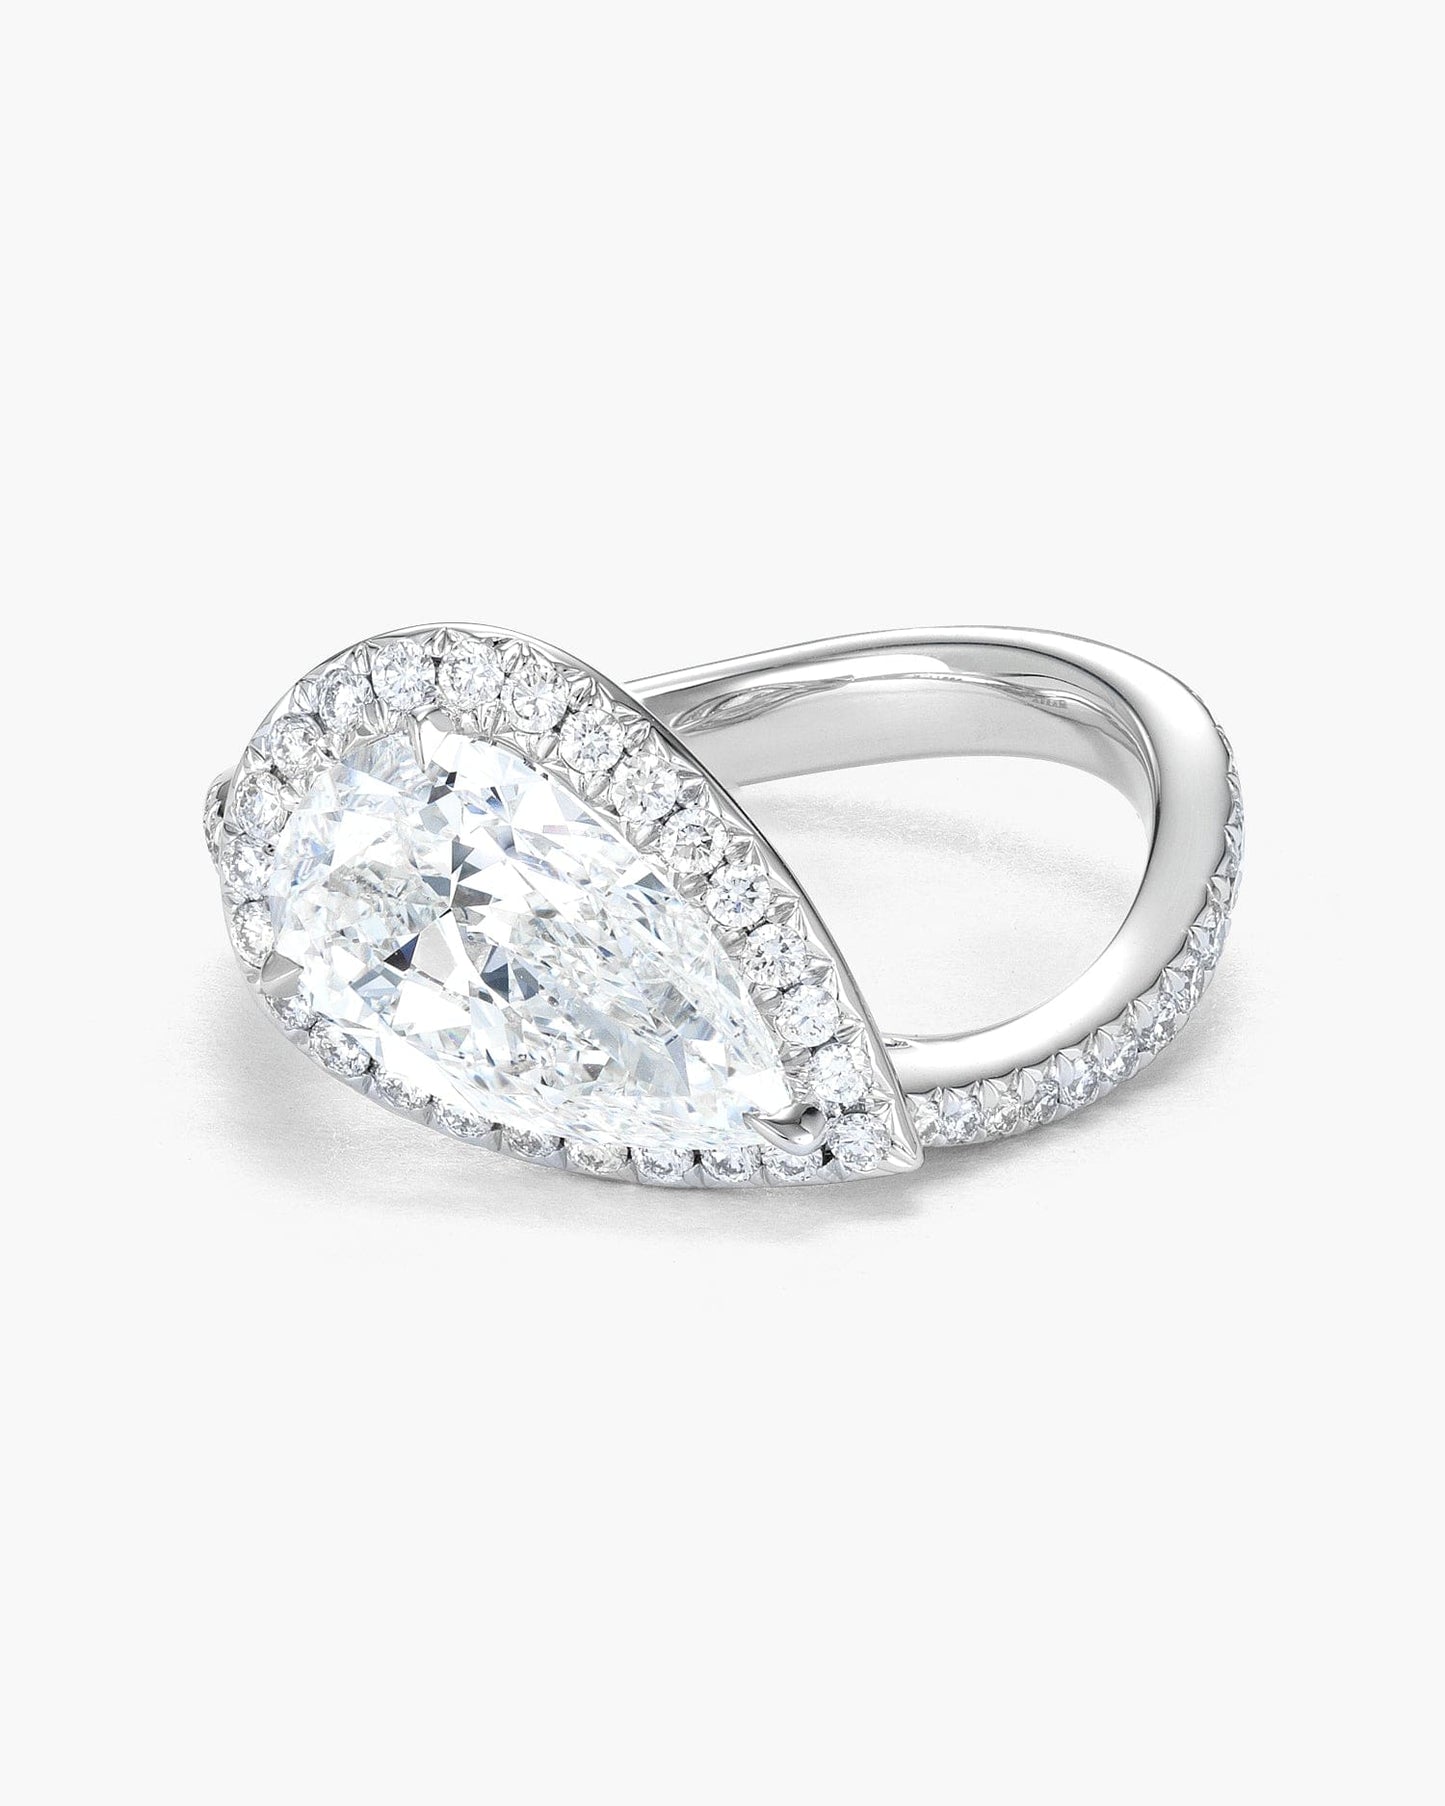 2.02 carat Pear Shape Diamond Ring